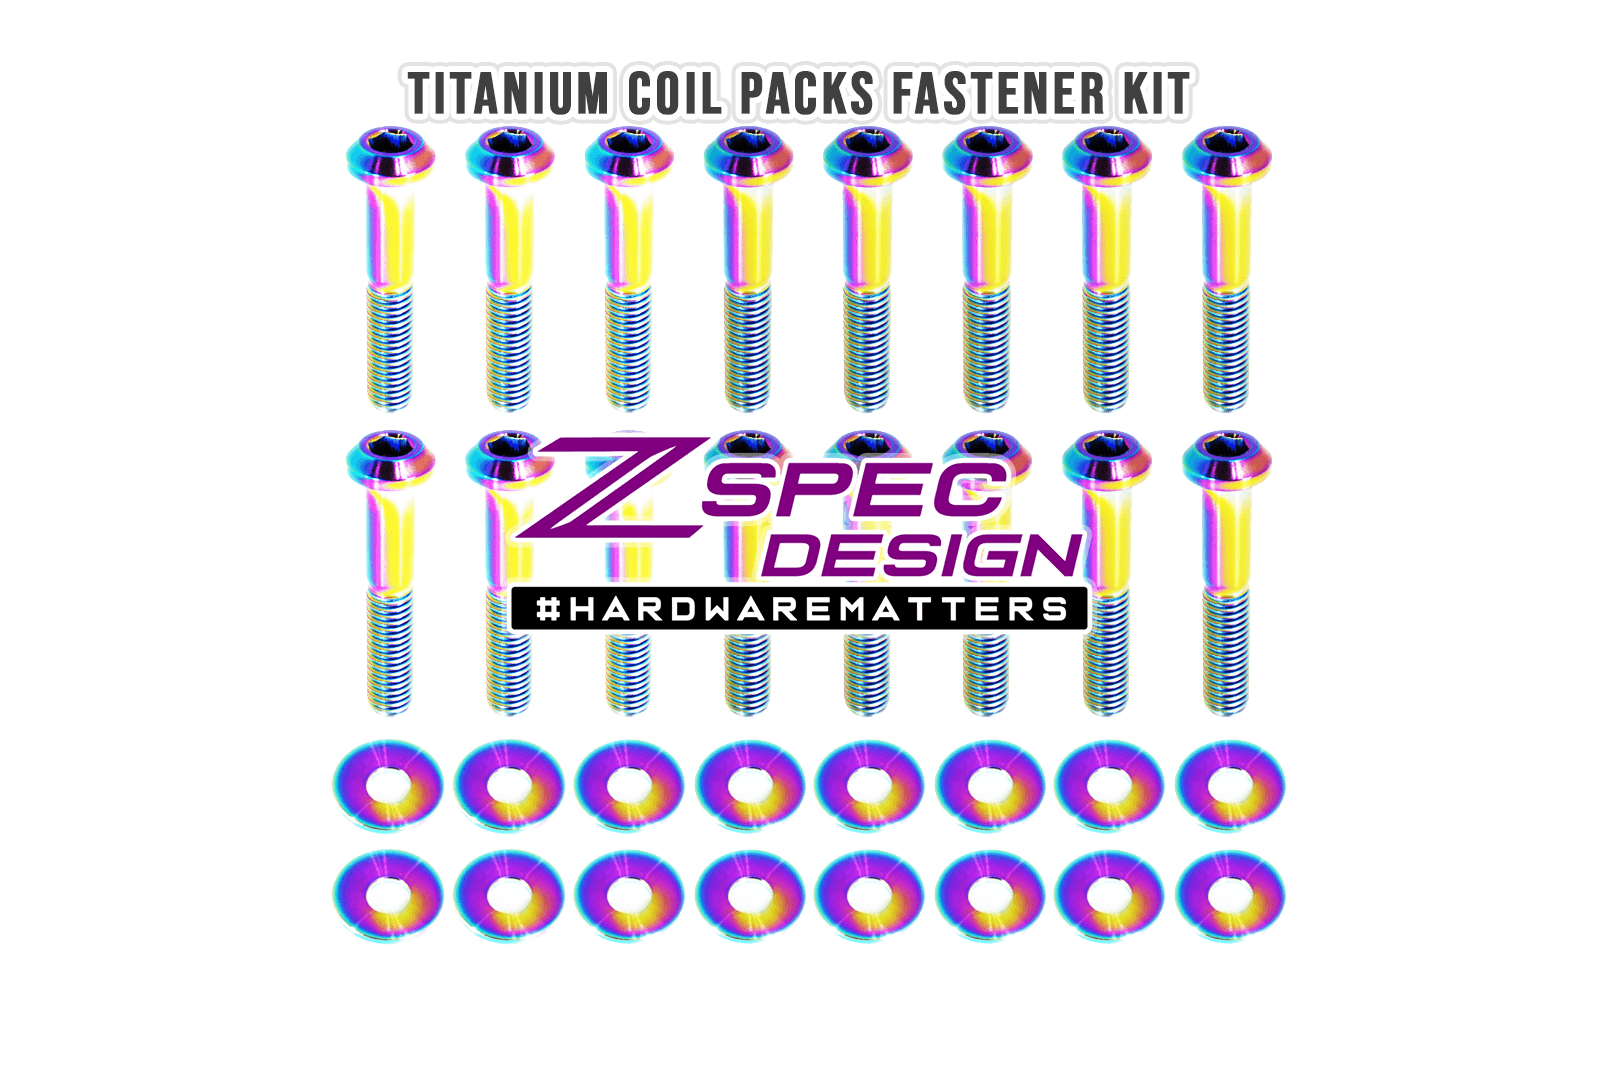 ZSPEC Titanium Coil Packs Fastener Kit for '16+ Chevy V8 Camaro SS  Titanium Grade-5 GR5 Hardware  Keywords Engine Bay Performance Upgrade Hobby Garage Auto Car Star Valve Cover Fenders Throttle Body